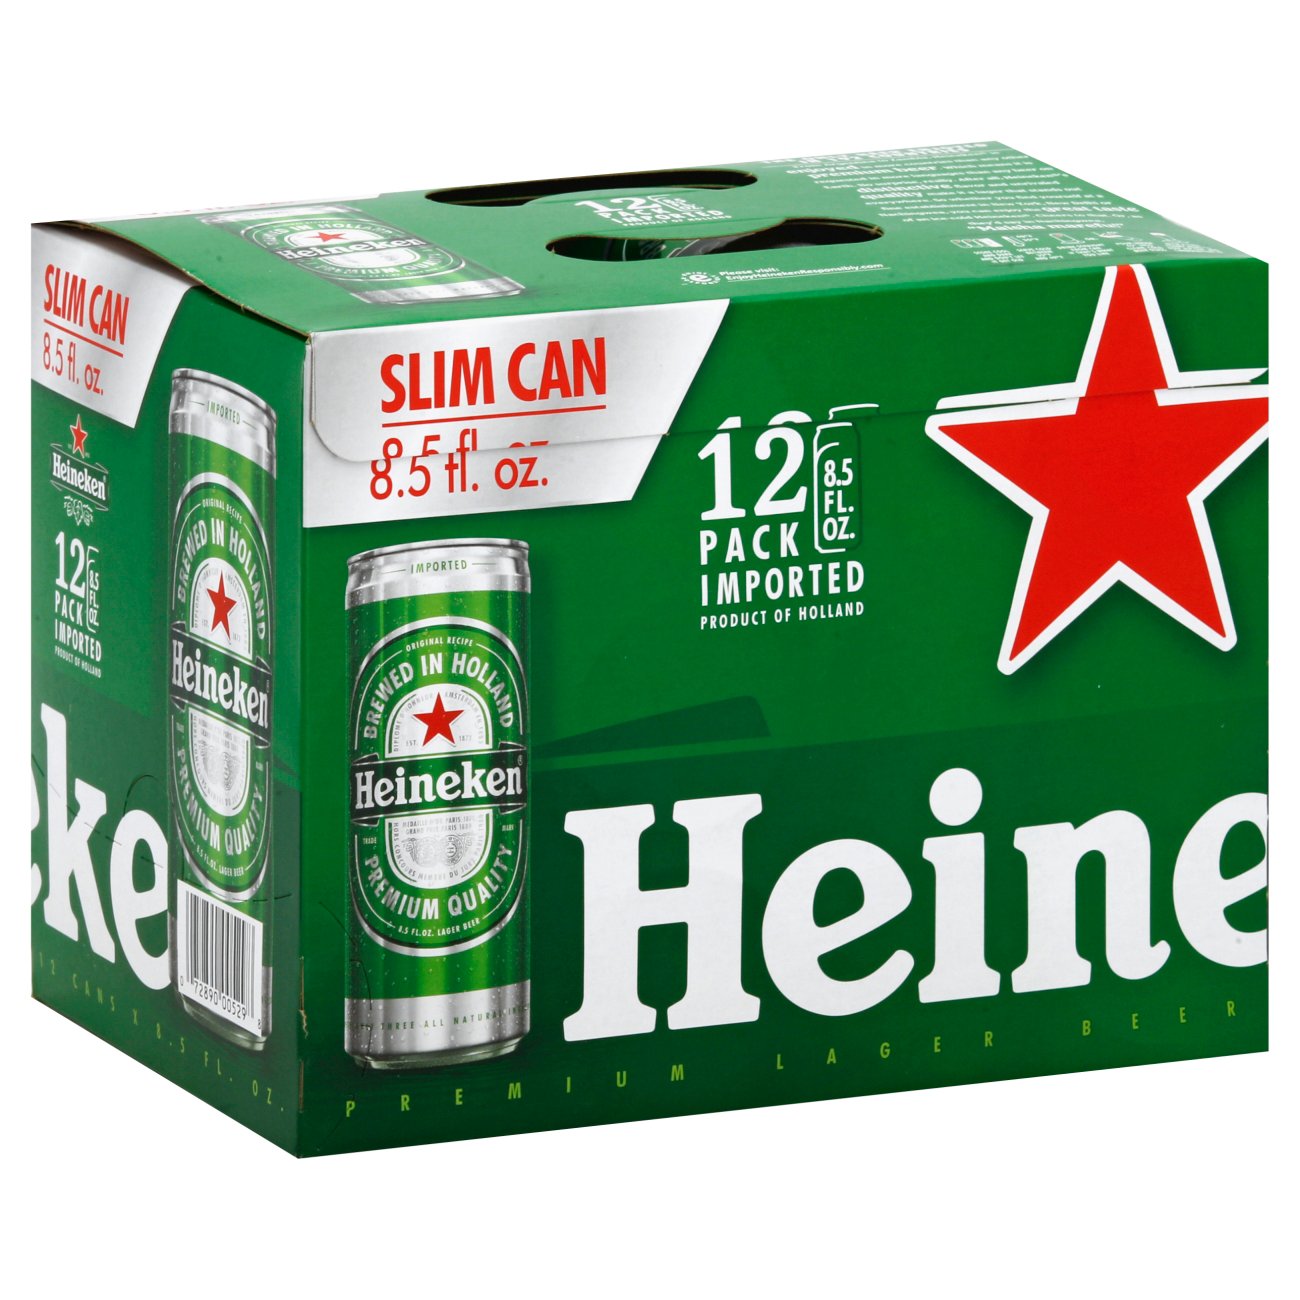 Buy Heineken beer wholesale